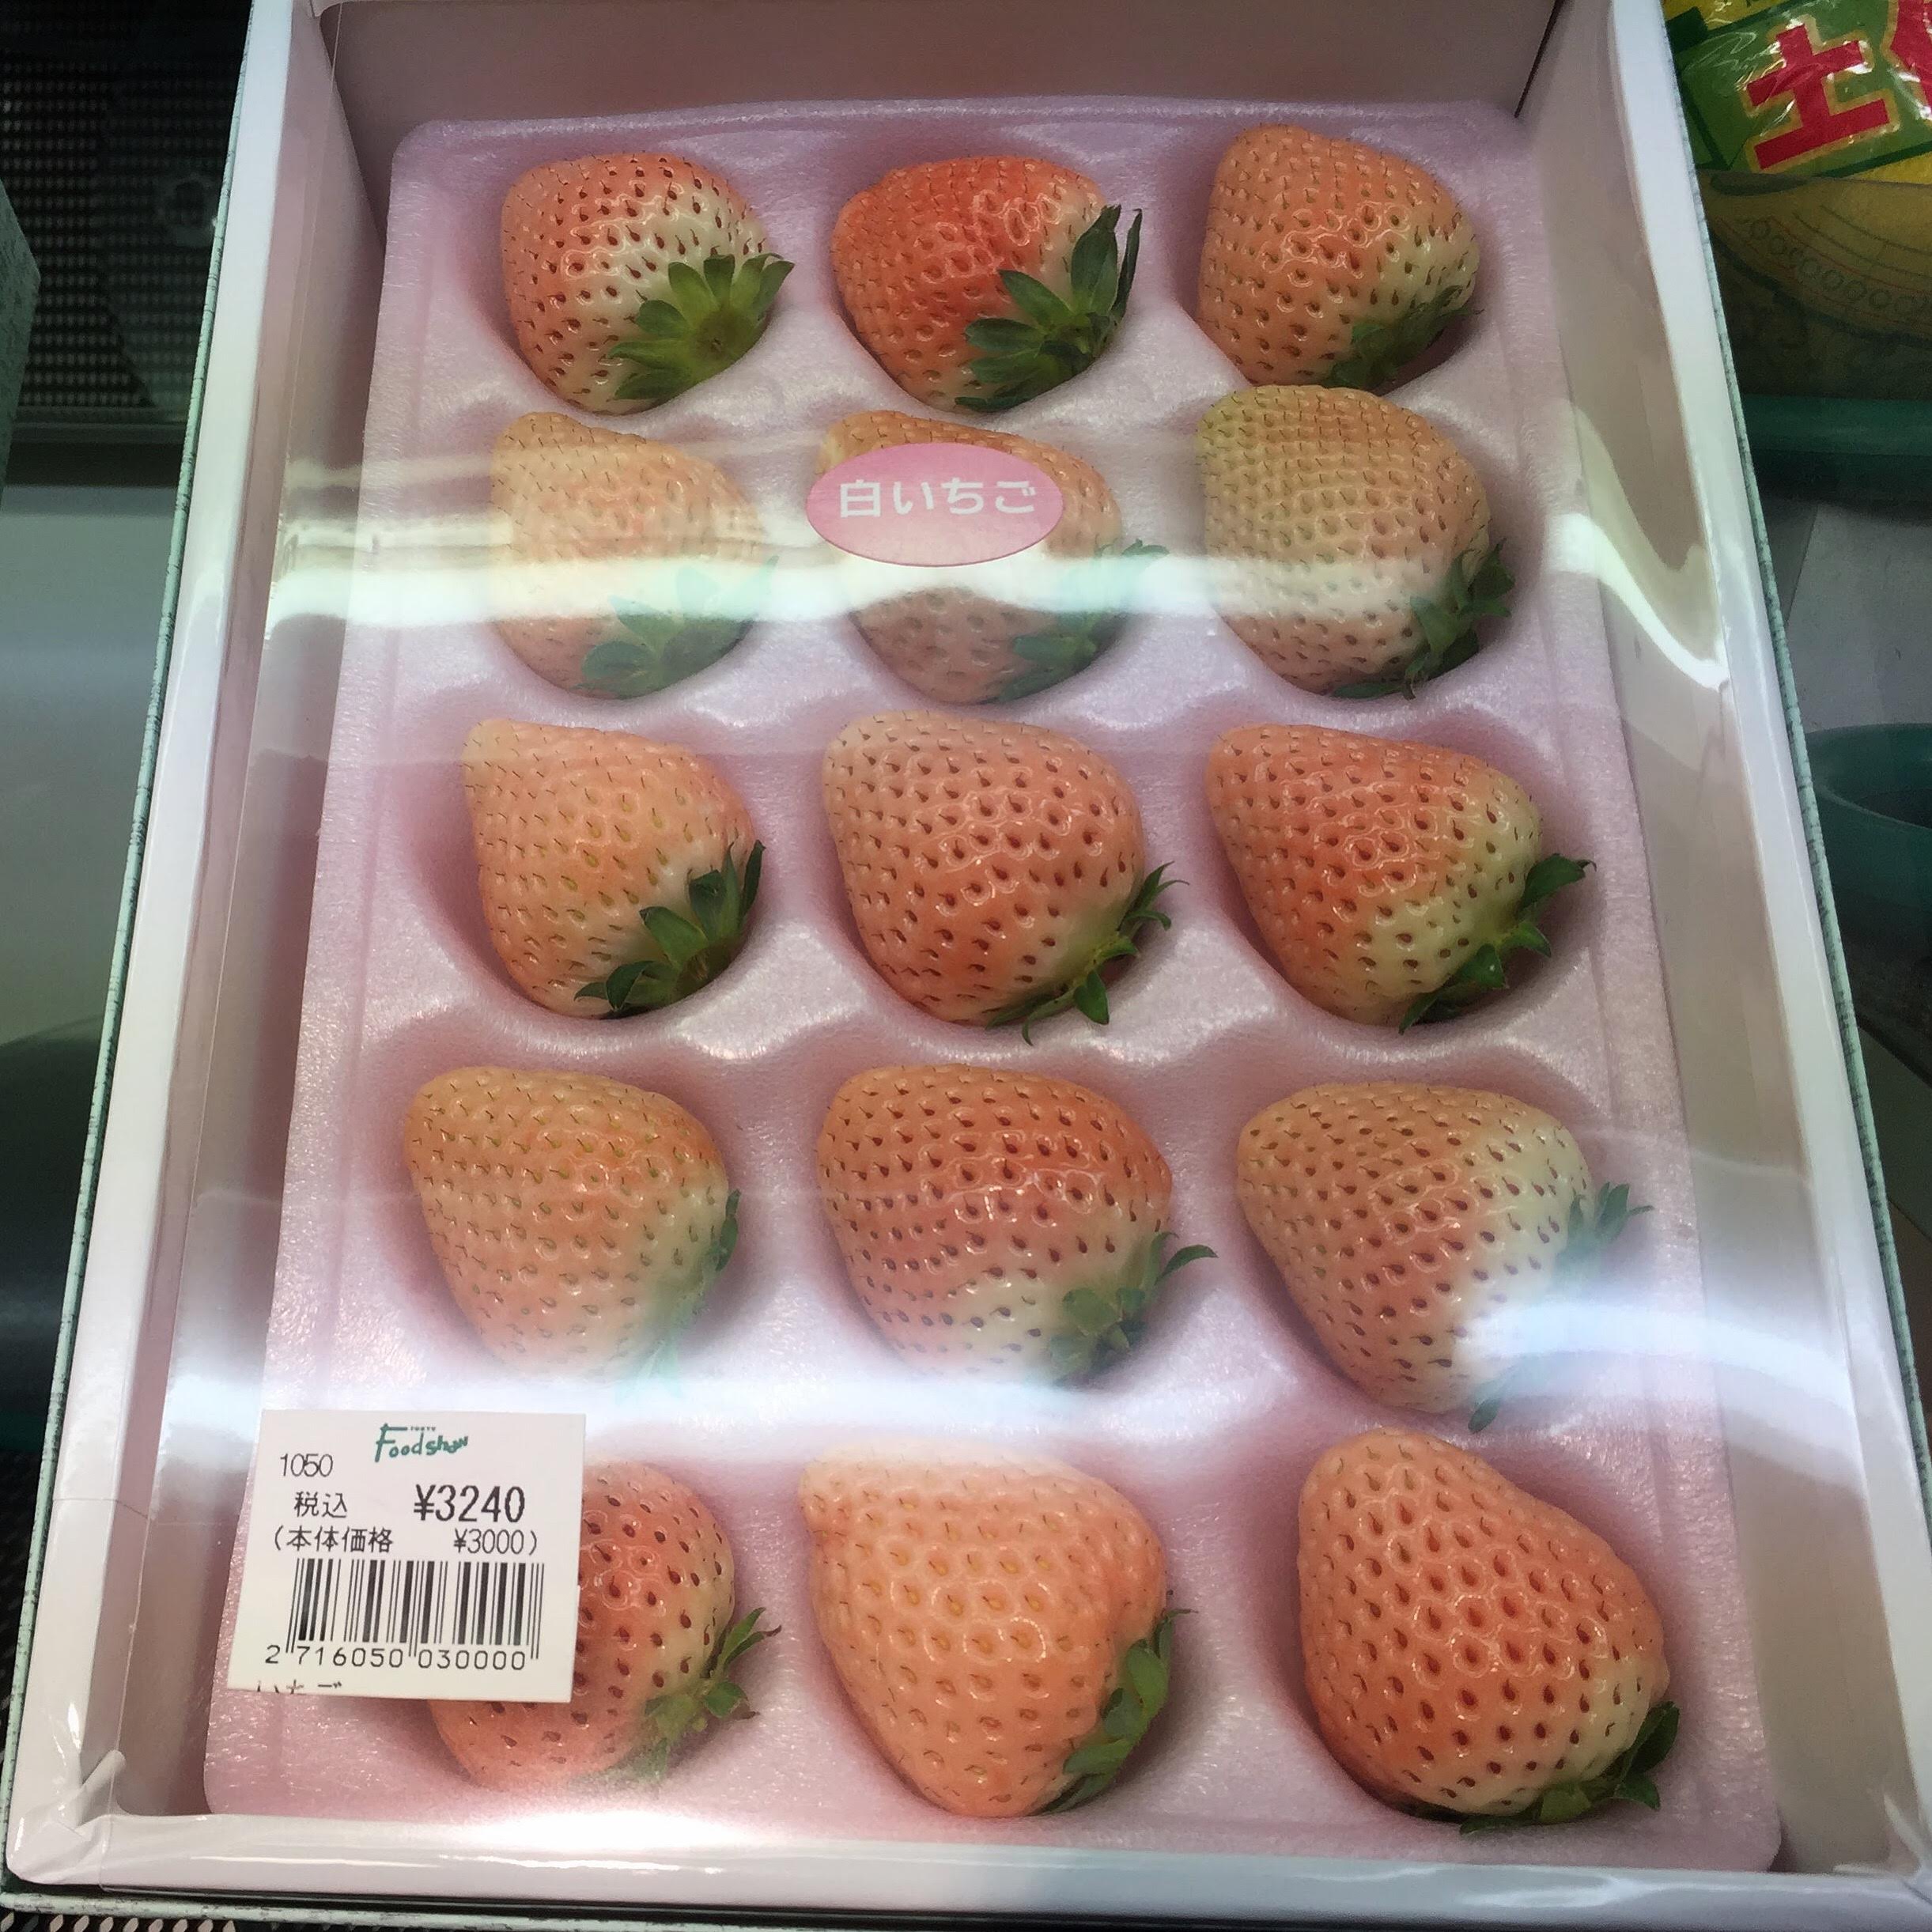 Weisse japanische Erdbeeren für 3000 Yen.